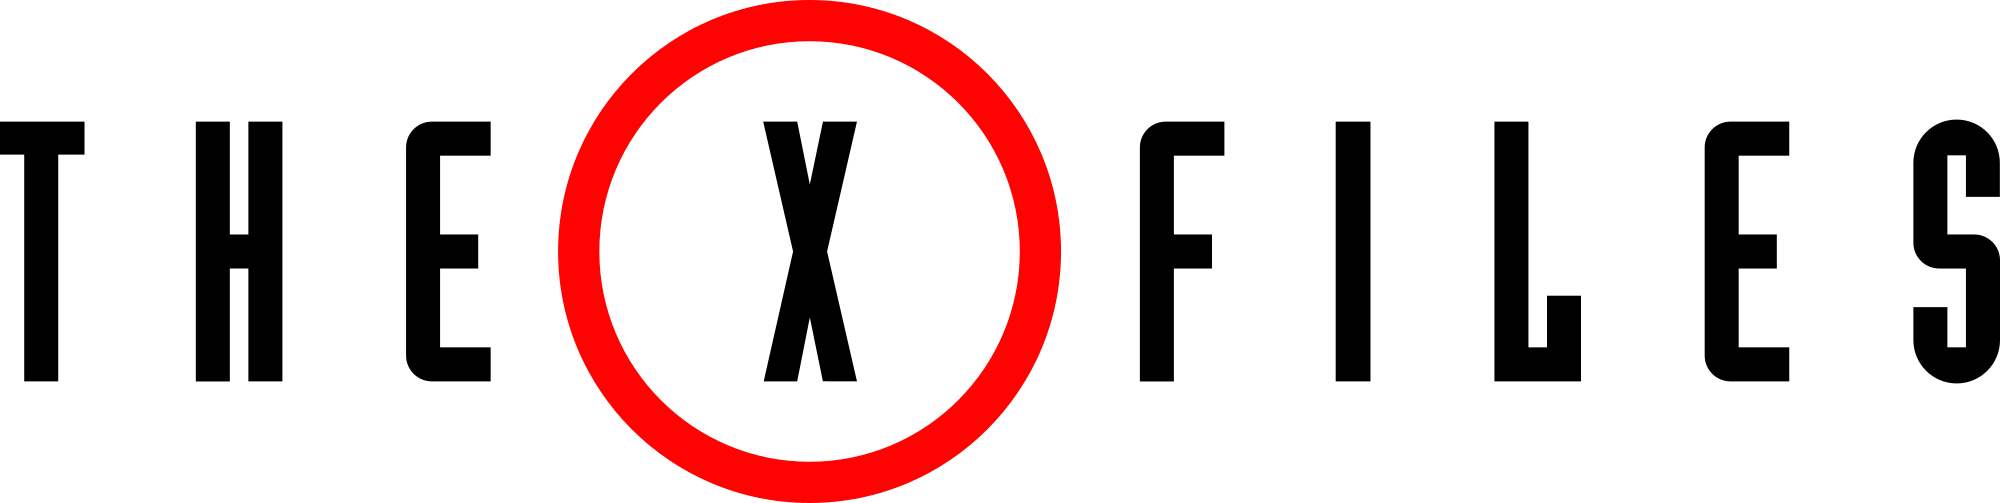 X-Files Logo - File:The X Files brand logo.svg - Wikimedia Commons